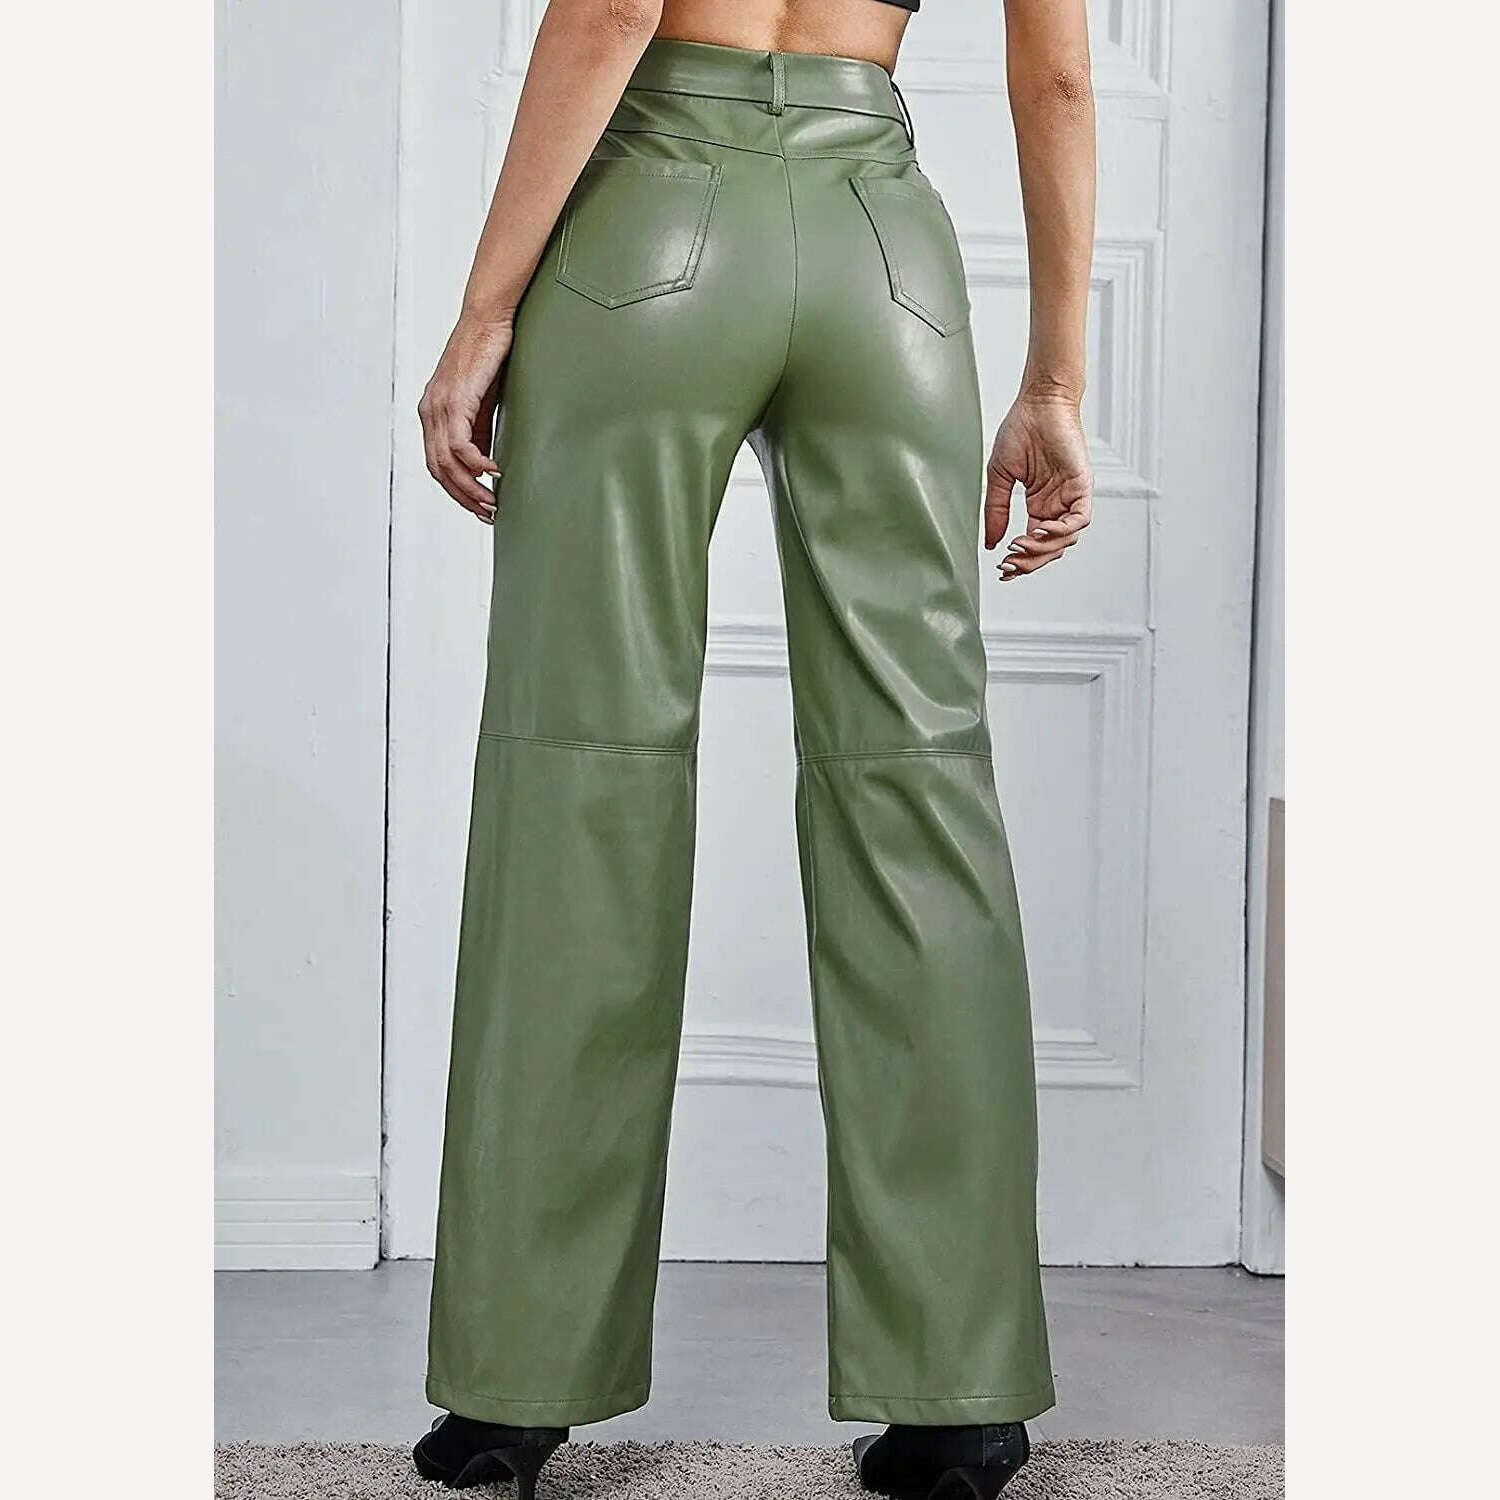 KIMLUD, PU Leather Pants High Waist Pockets Women&#39;s Green Black Wide Leg Pants 2021 Autumn Winter Fashion New TrousersBlusas Loose Shirt, KIMLUD Women's Clothes